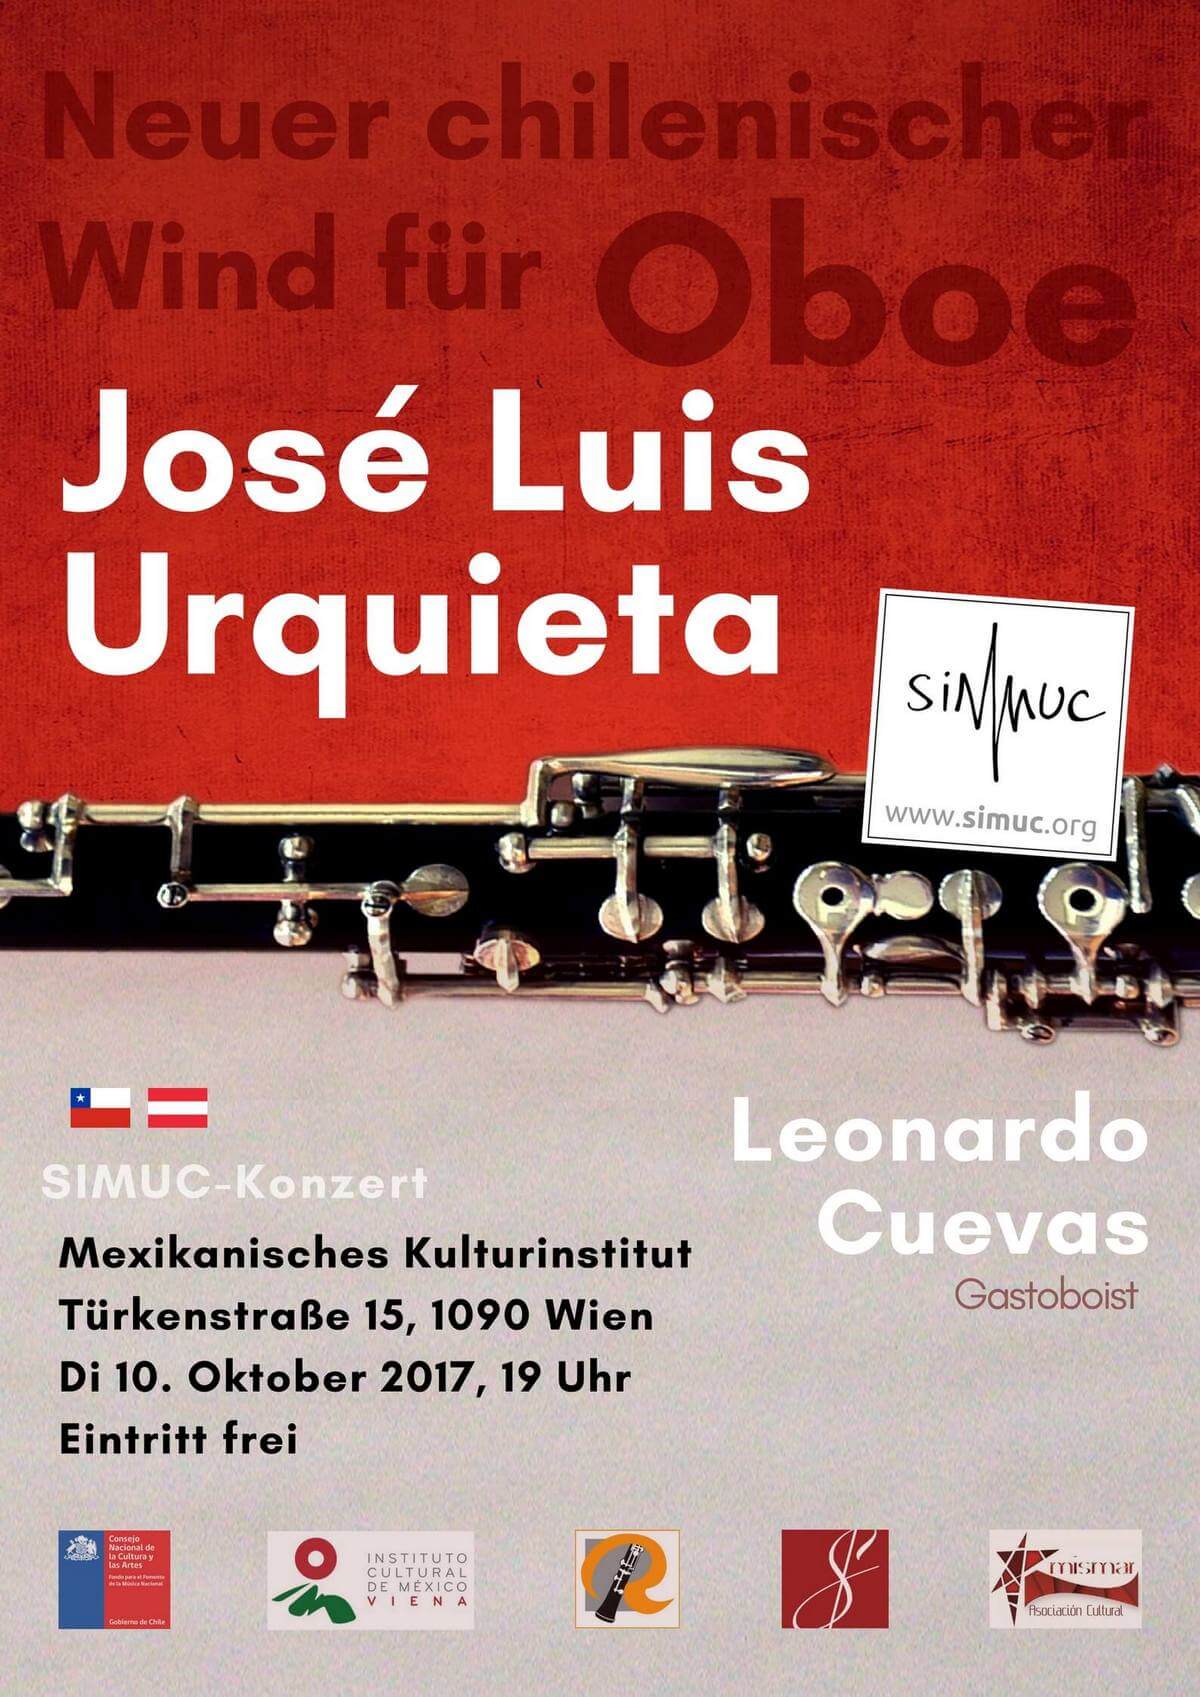 Oboist José Luis Urquieta in Vienna